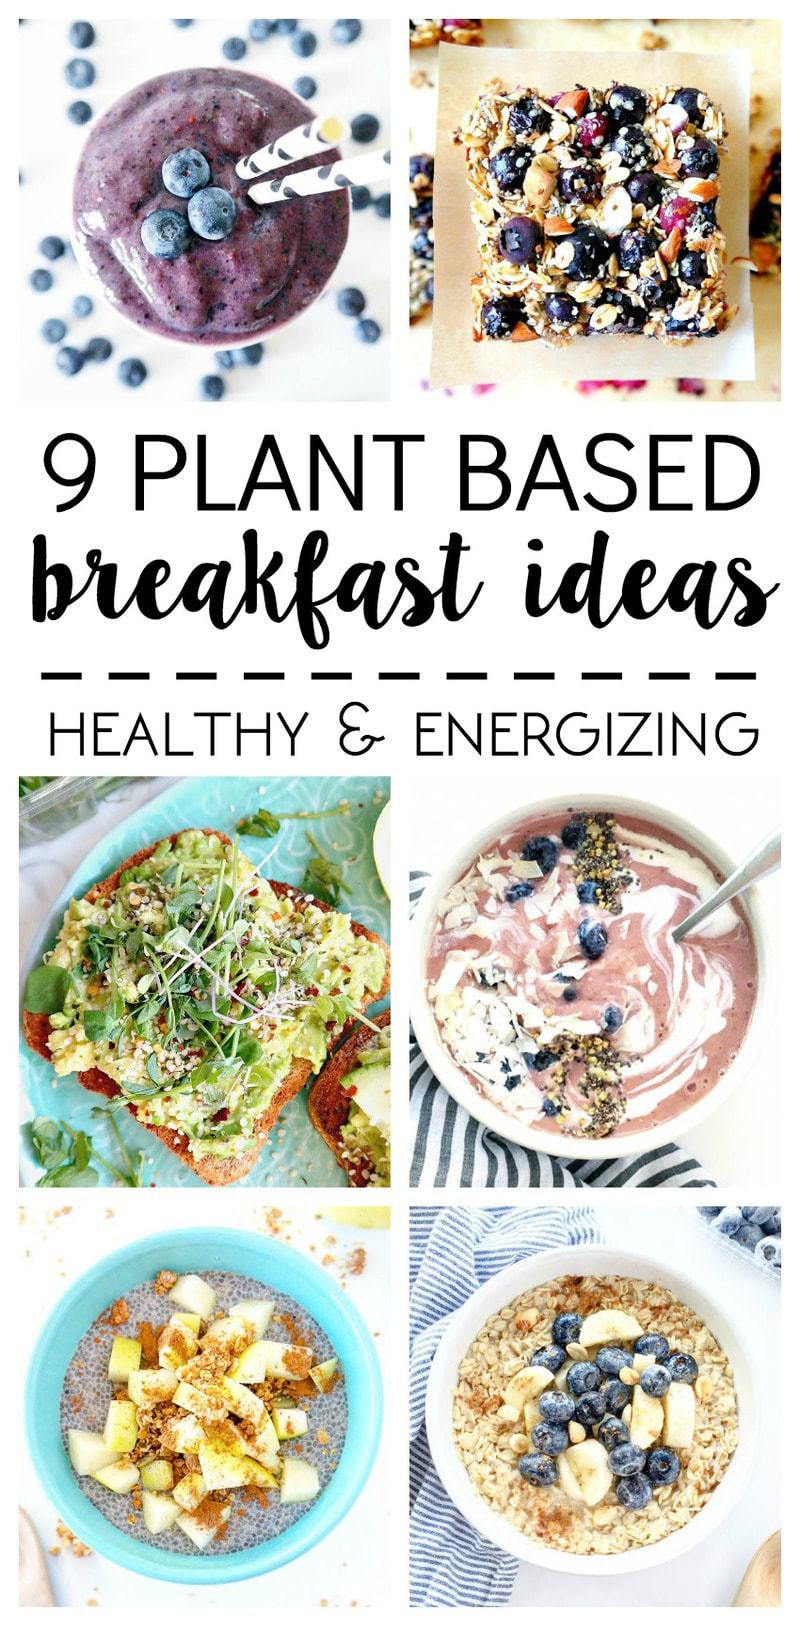 Vegan Breakfast Recipes Plant Based
 What I Ate 9 Plant Based Breakfast Ideas The Glowing Fridge